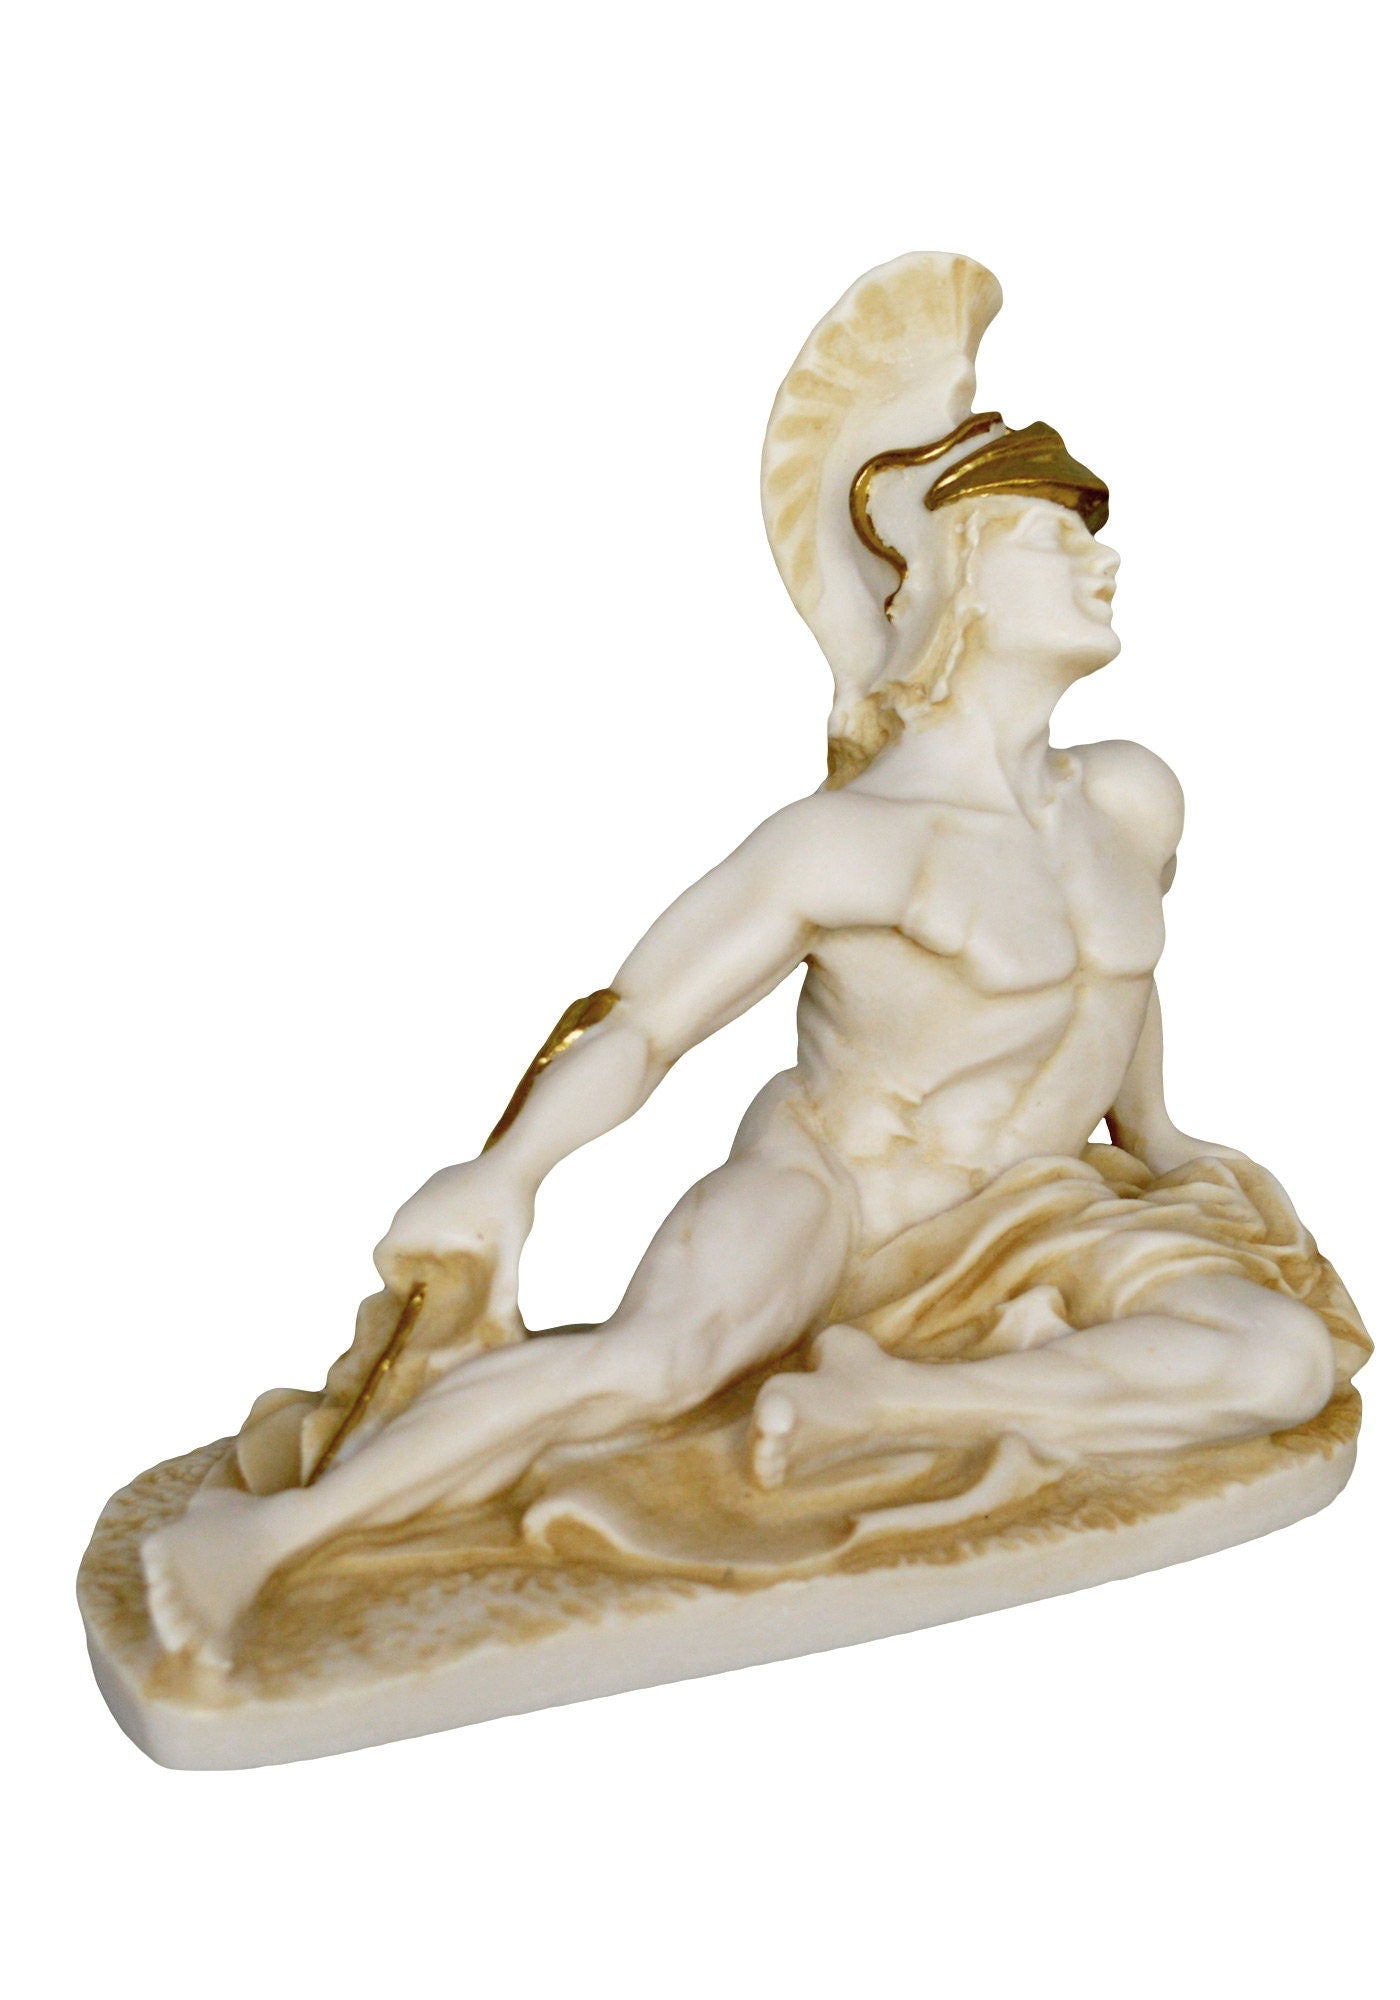 Achilles - King of the Myrmidons - Greek Hero - Son of Thetis and Peleus - Trojan War - Homer's Iliad -  Aged Alabaster Statue